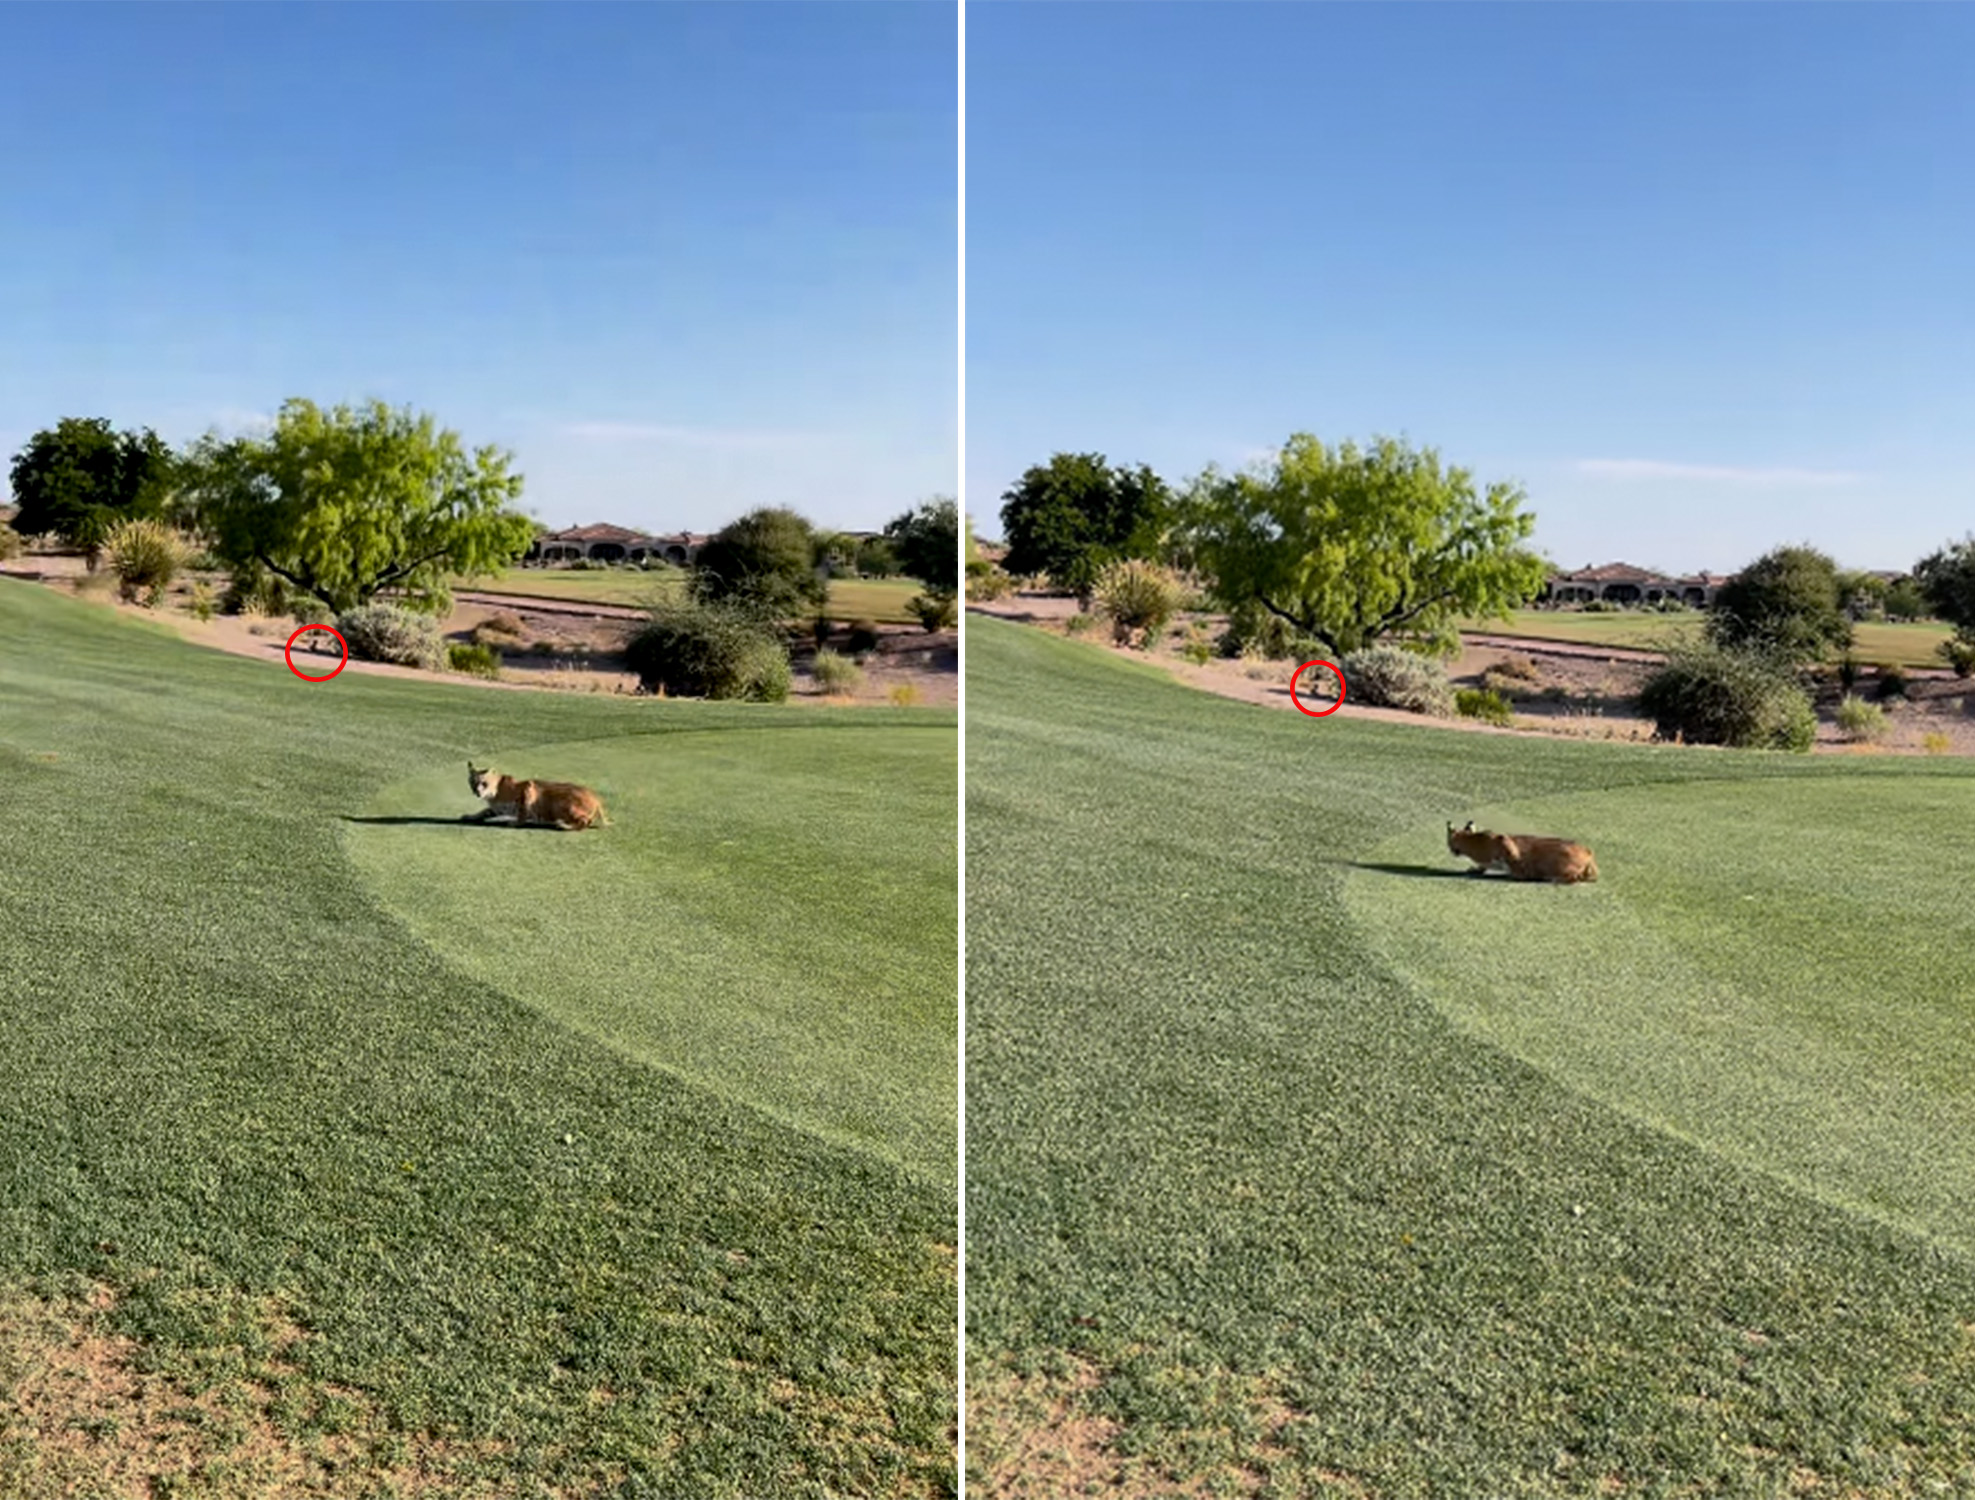 video bobcat hunts rabbit golf course